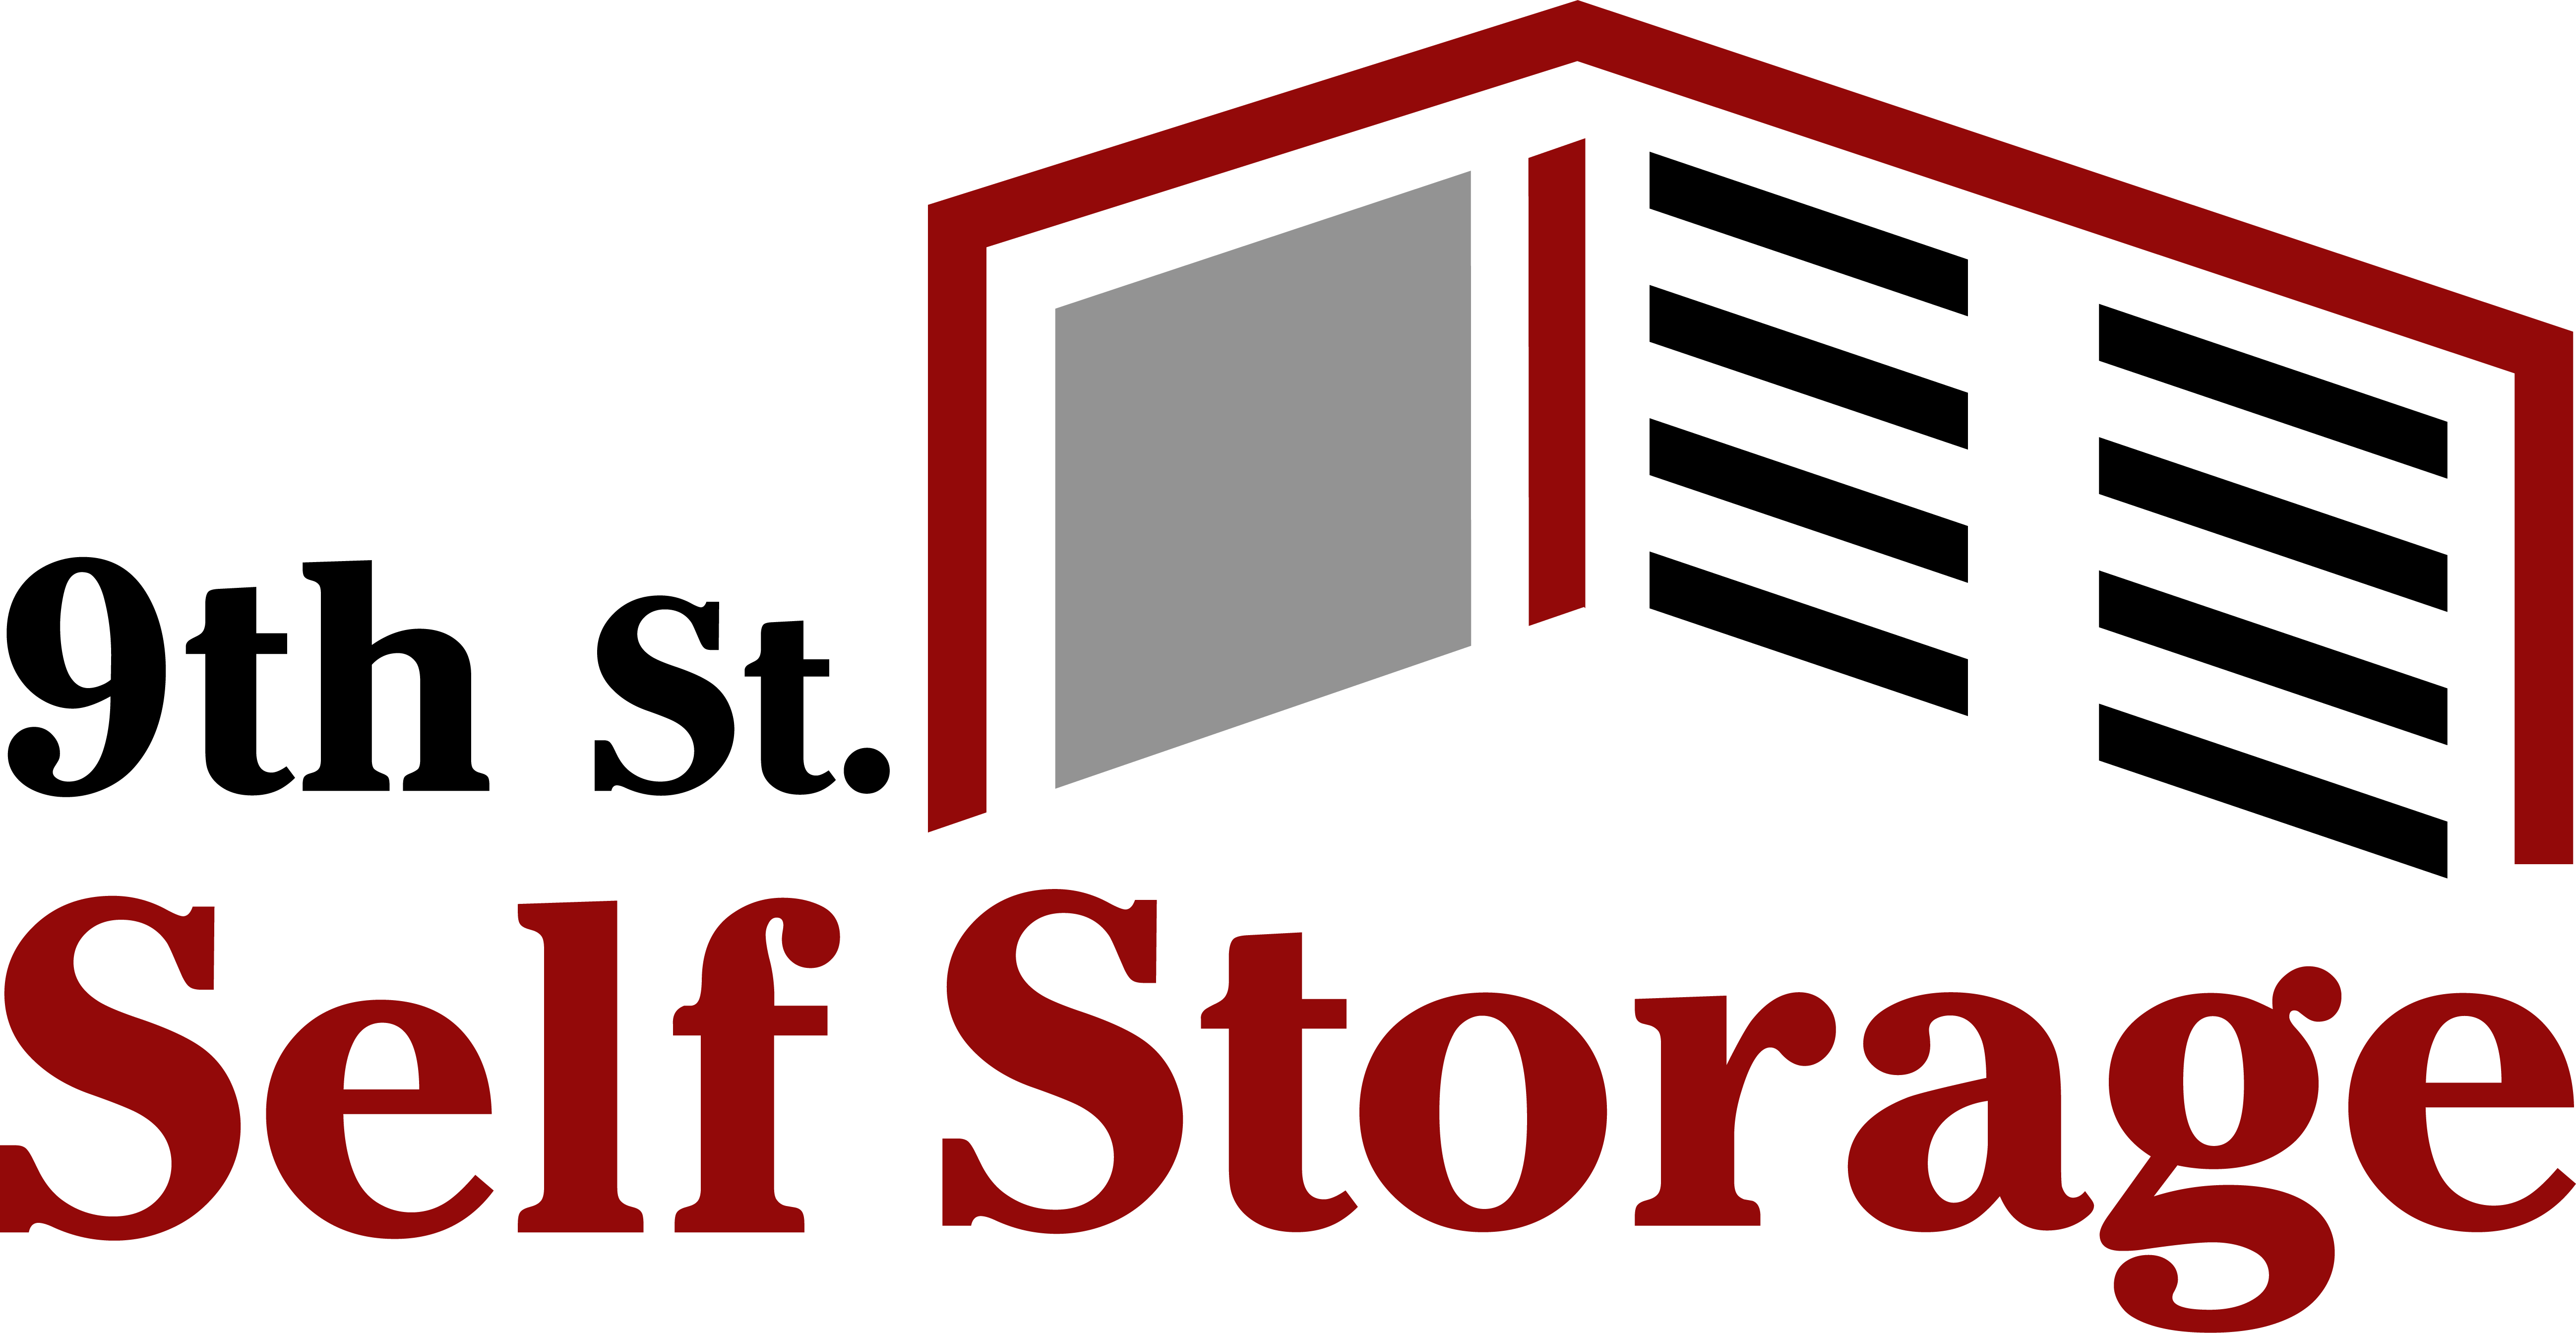 9th street self storage logo